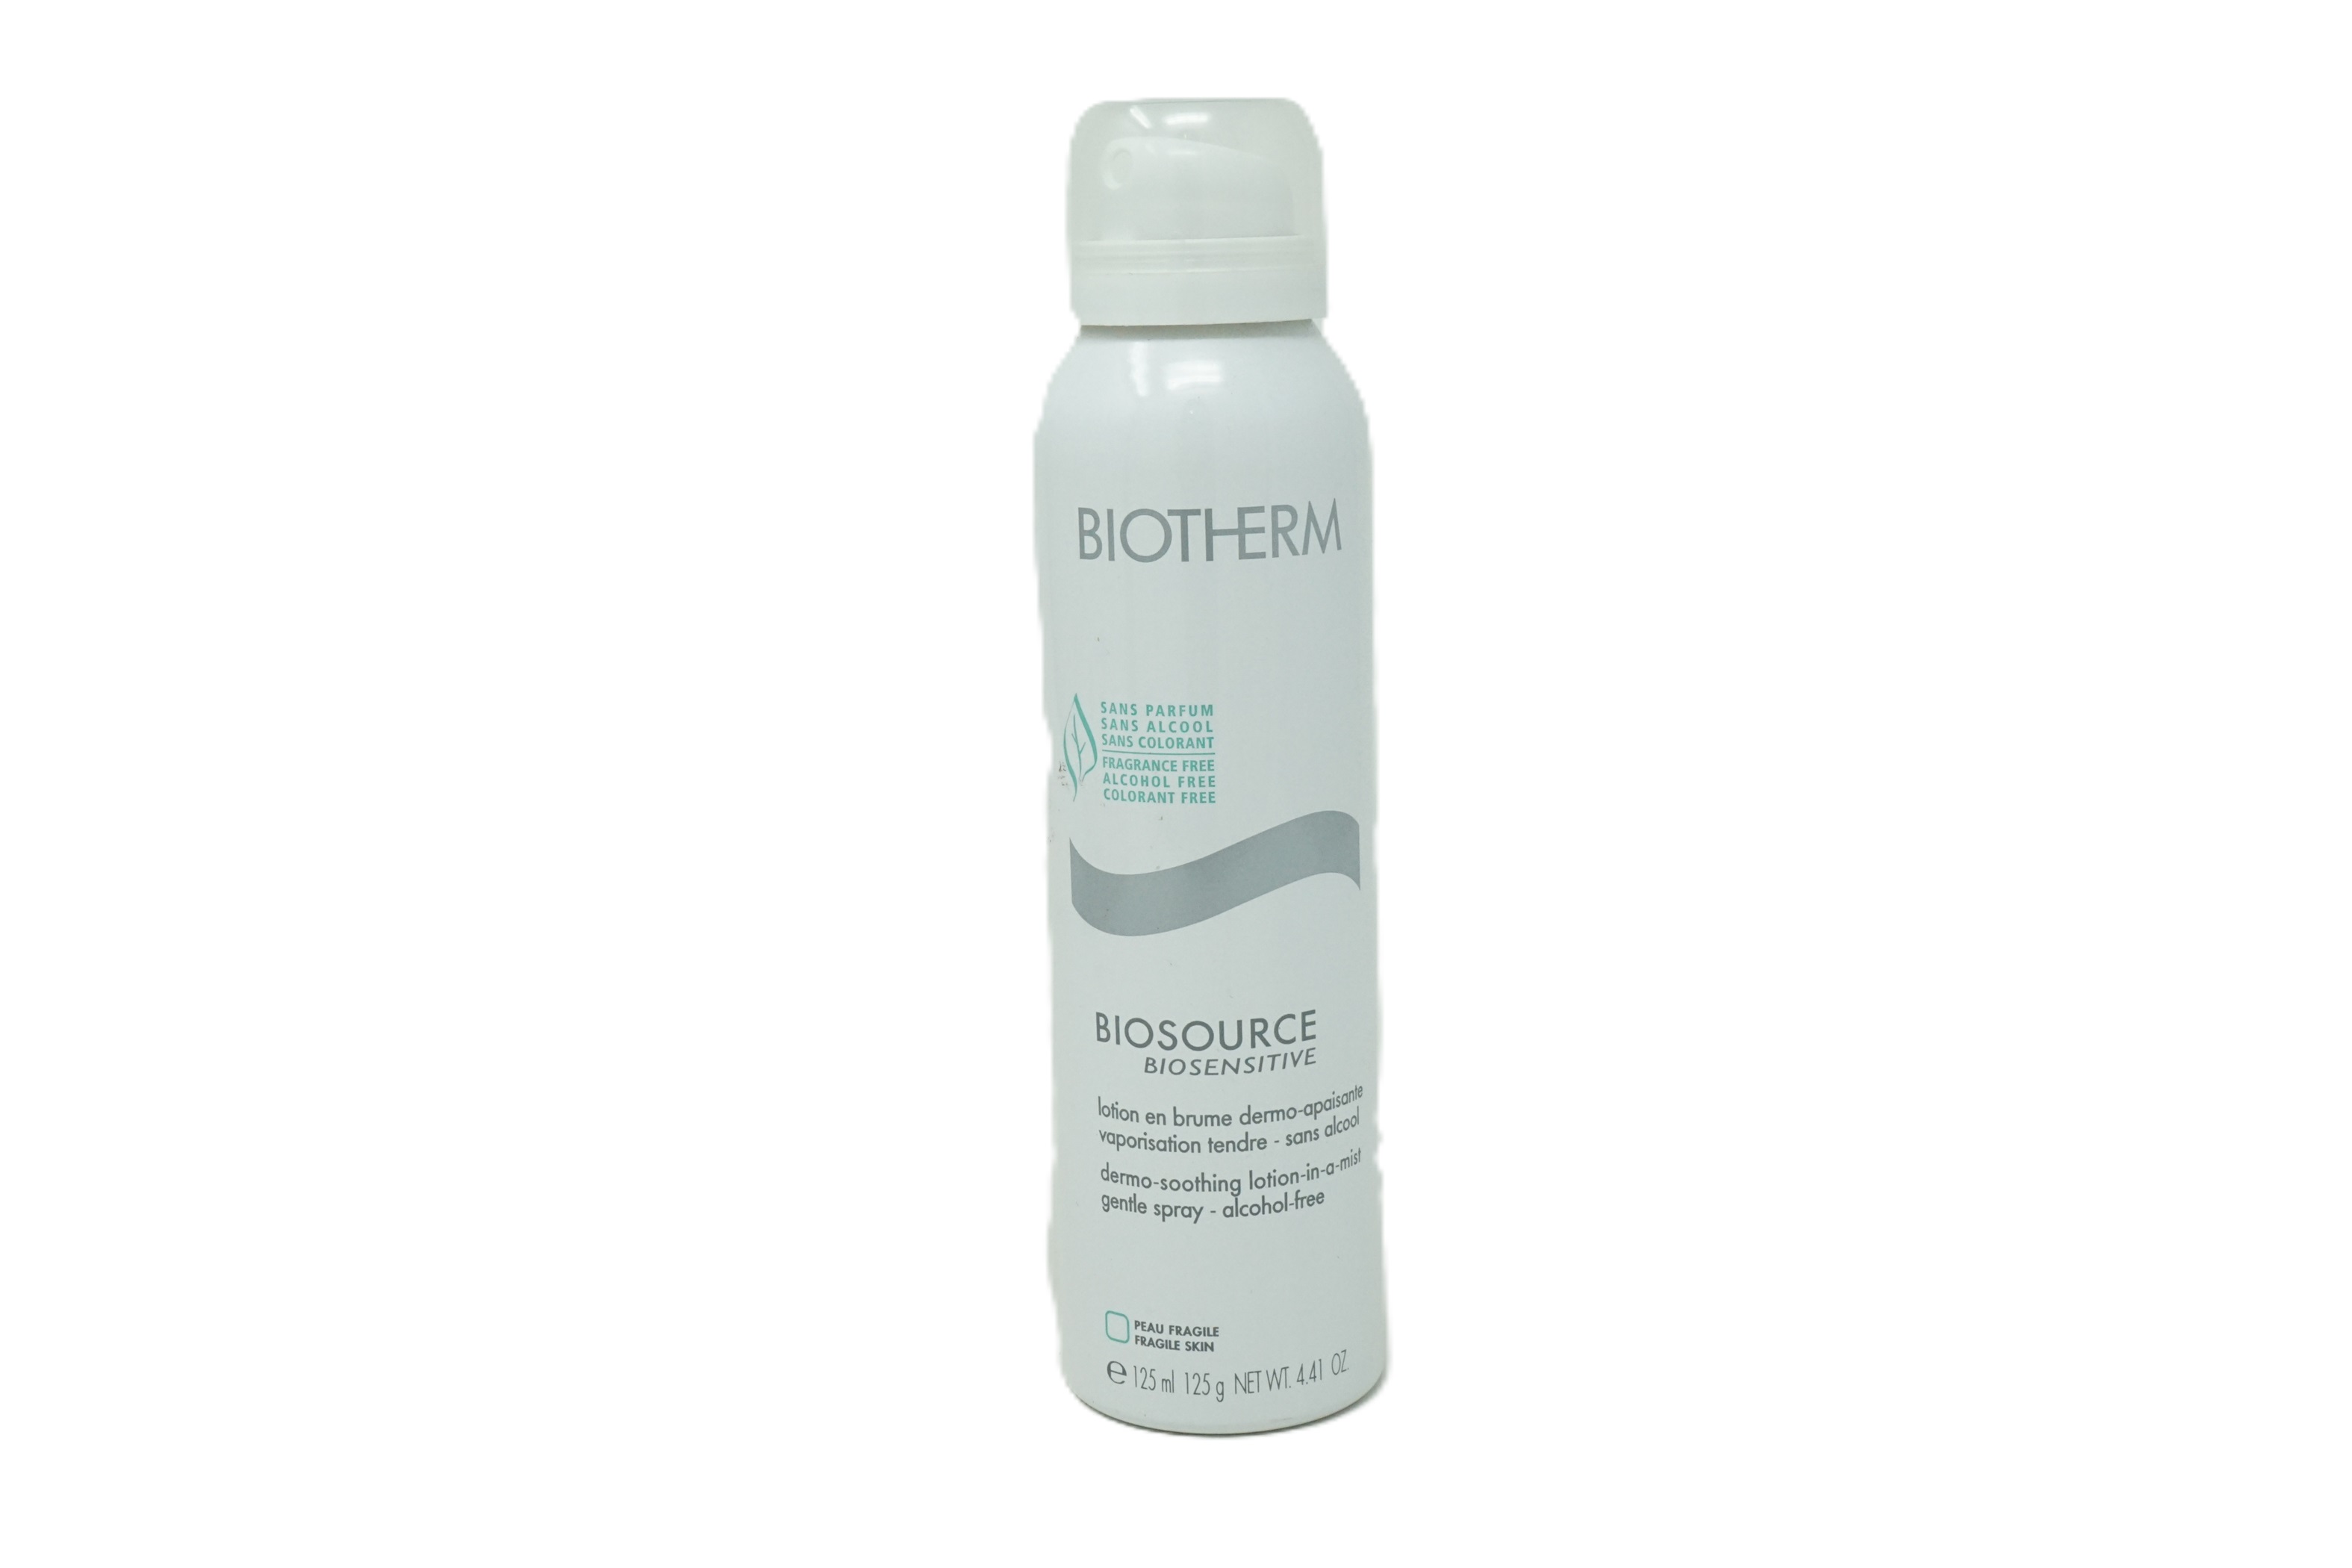 Biotherm Biosource Biosensitive Soothing Lotion Spray 125 ml